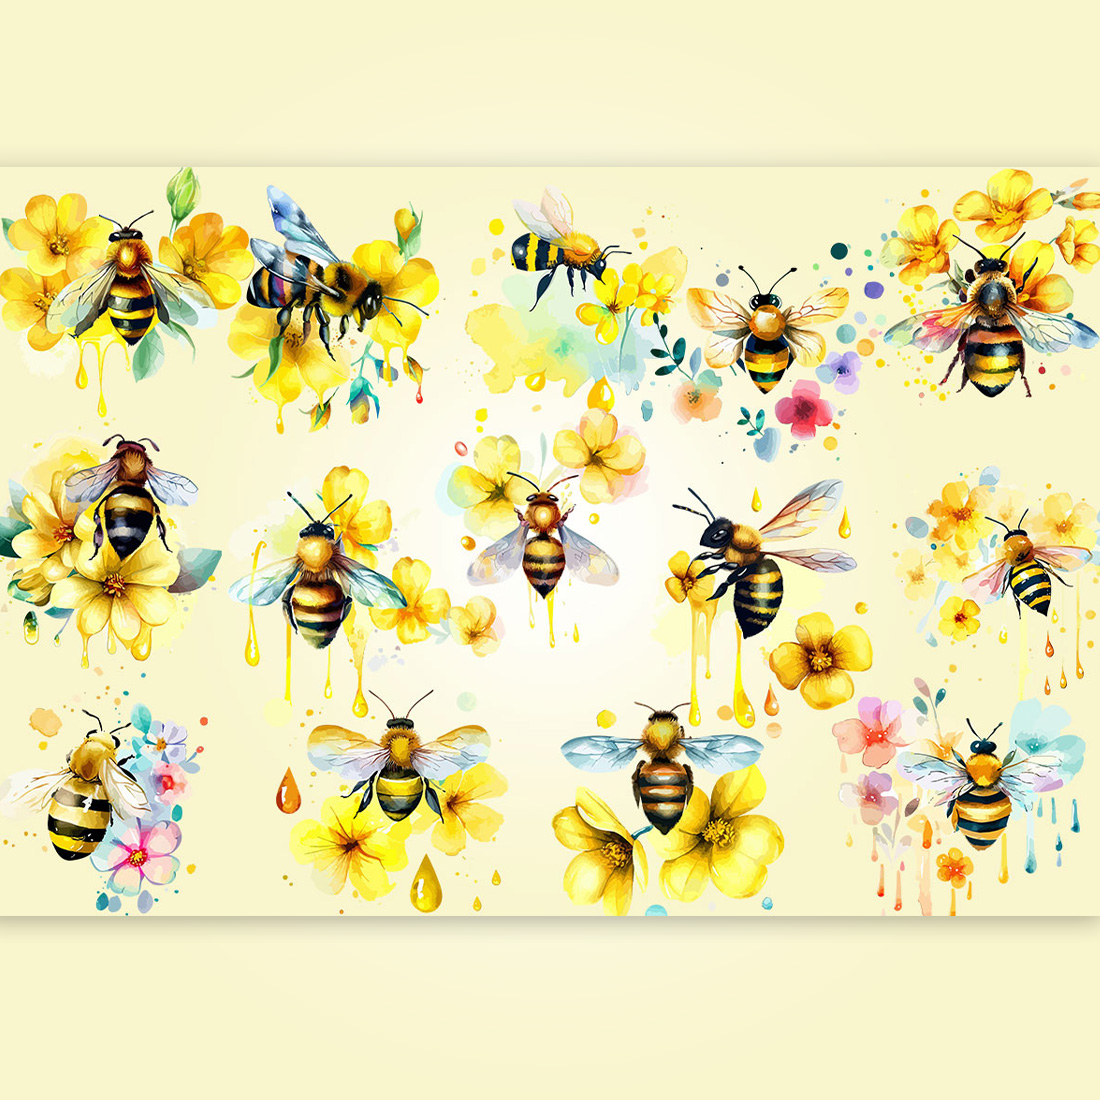 Bee Flowers Watercolor Bundle cover image.